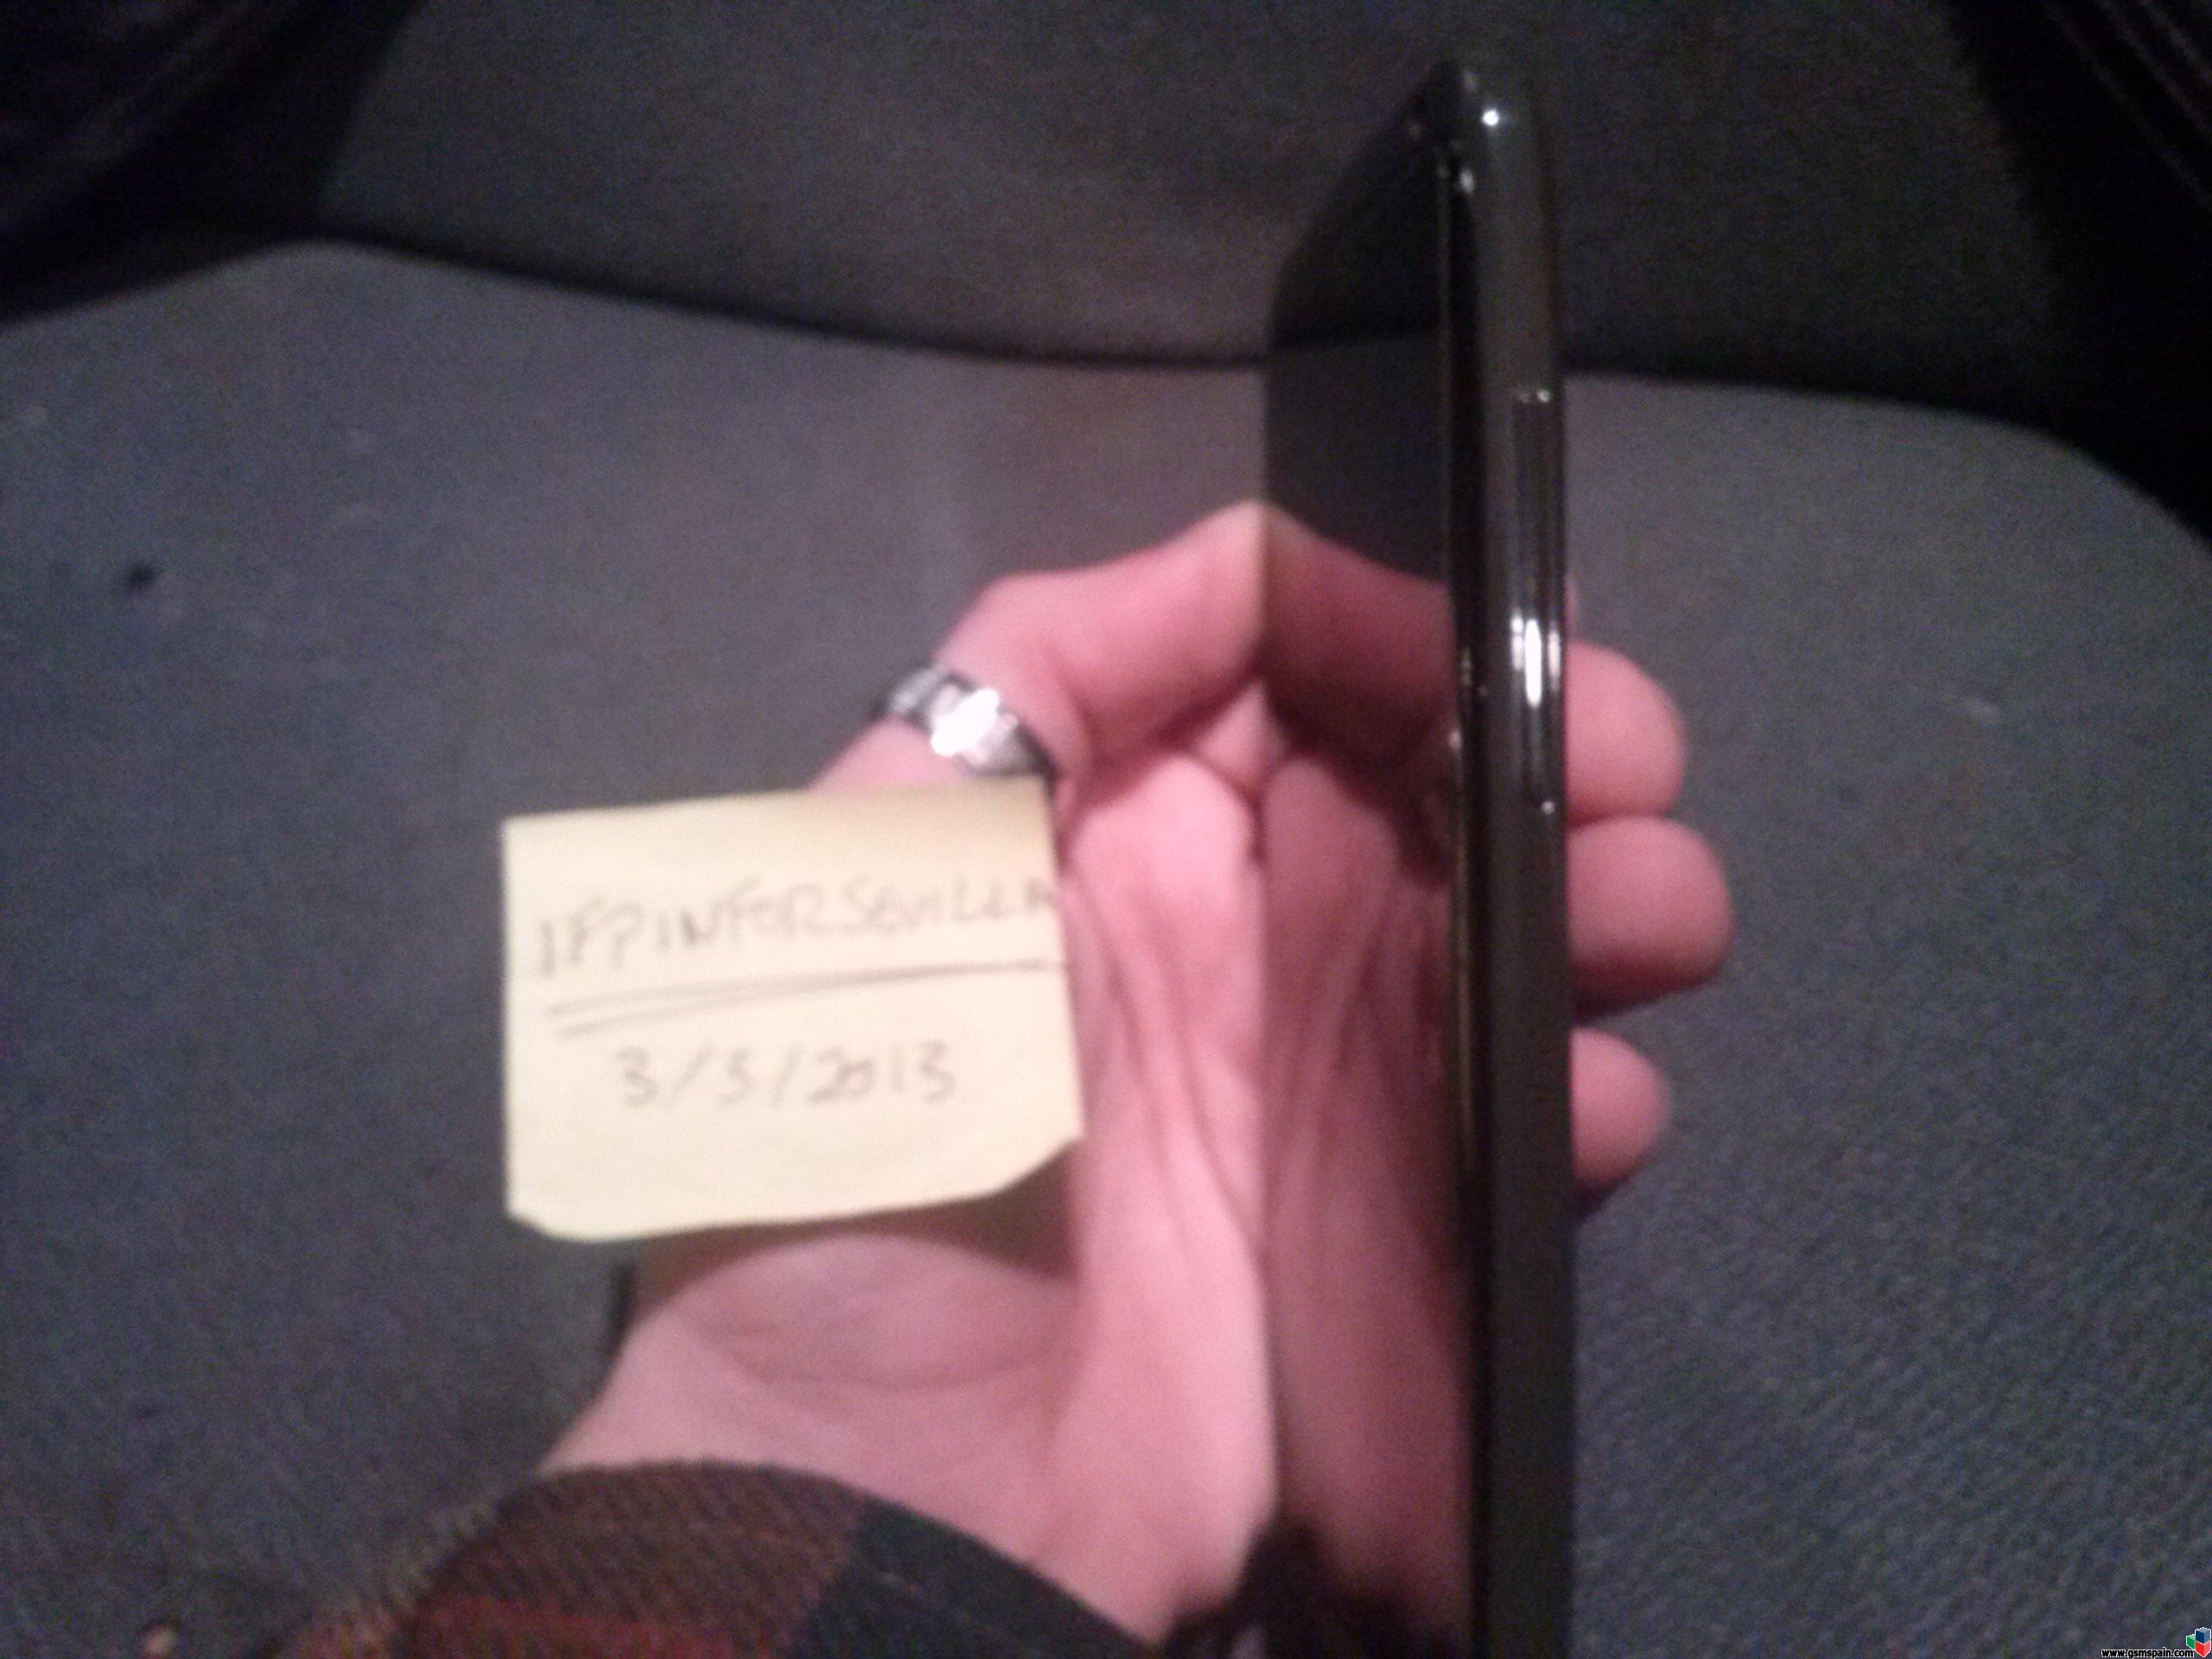 [VENDO] HTC ONE X 32GB + Auriculares UrBeats + funda GRATIS. Slo 339 Euros!!